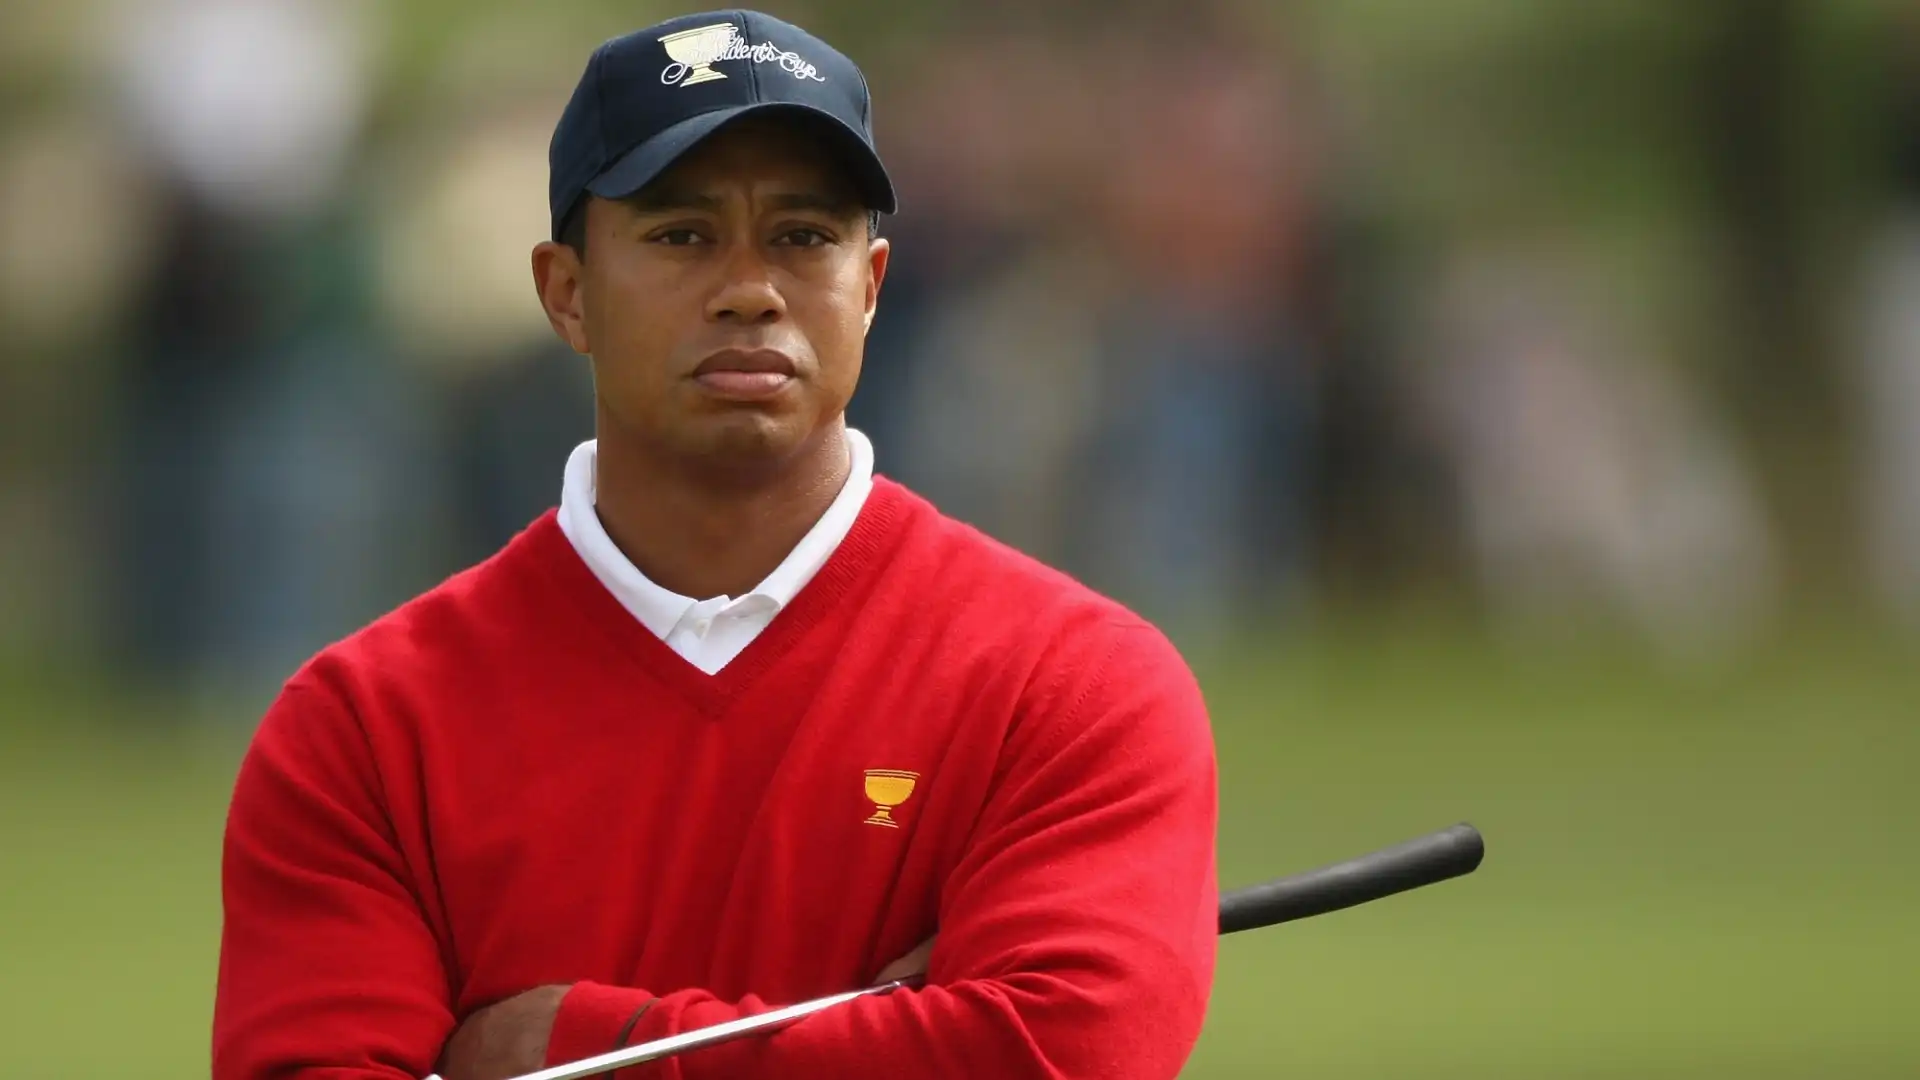 2009: Tiger Woods (Golf), guadagni totali stimati 110 milioni di dollari